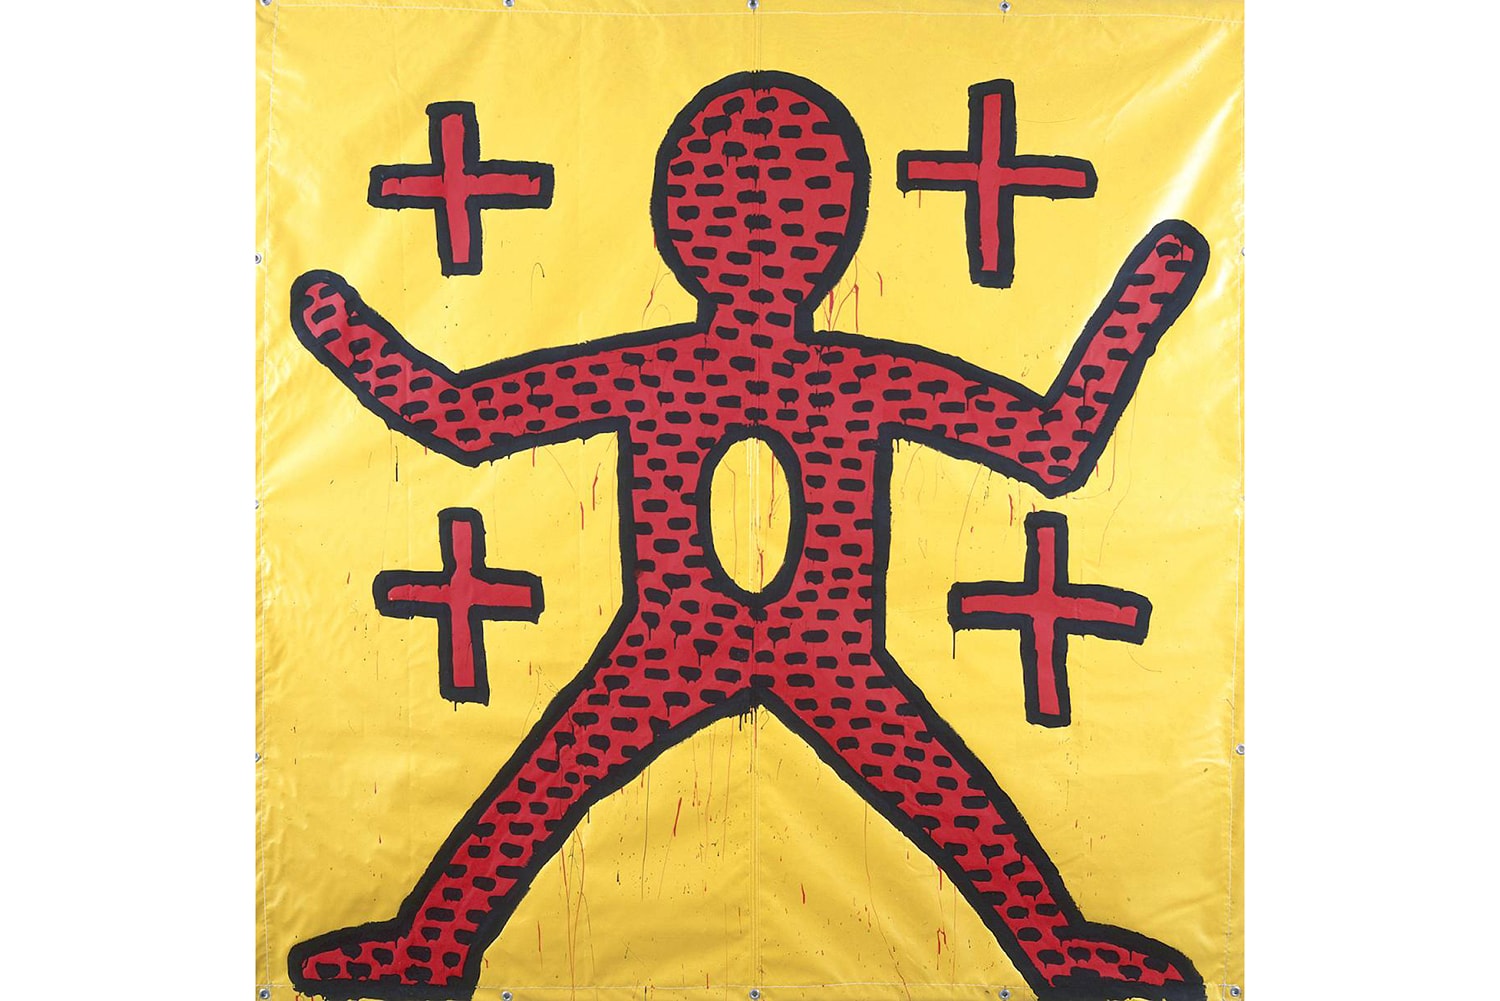 ALBERTINA Museum Keith Haring Exhibit exhibition art paintings artwork